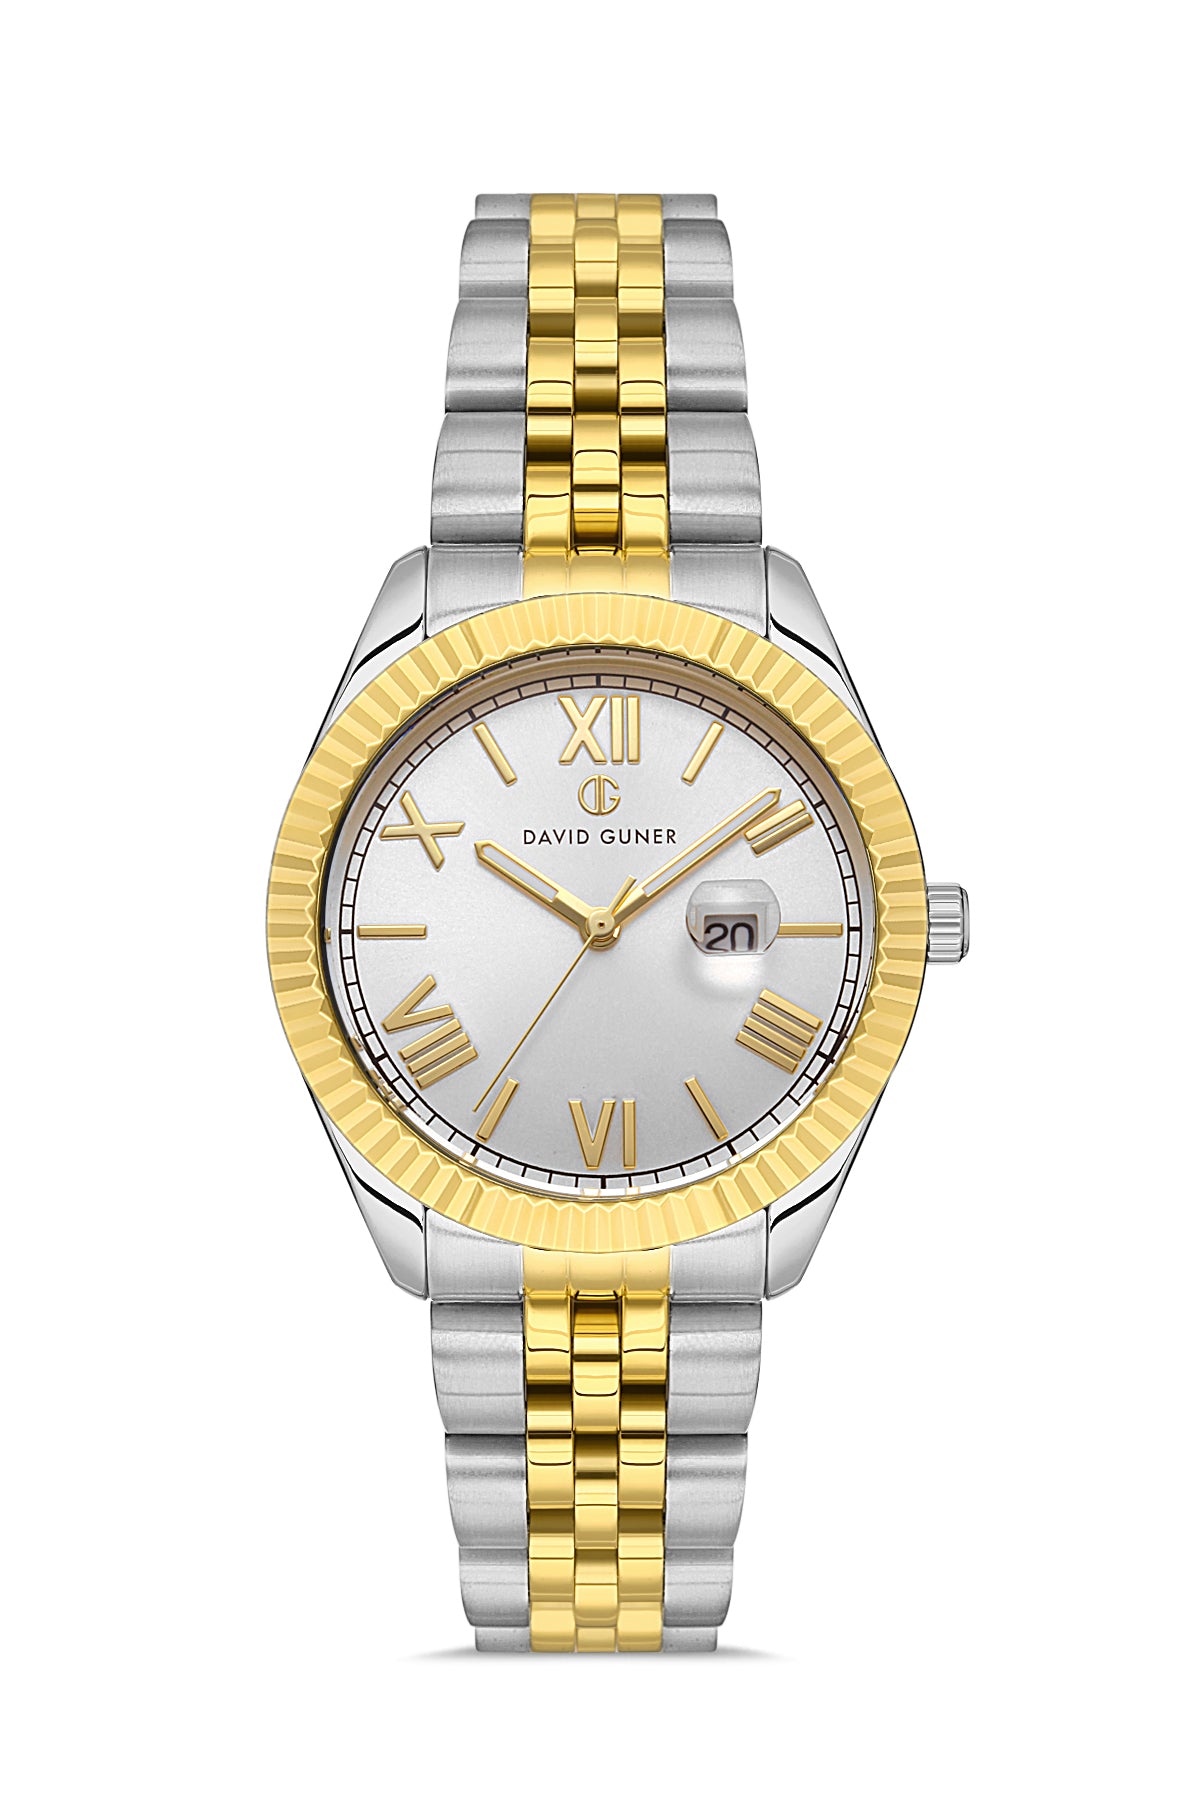 DAVID GUNER Yellow and White Dial Women's Wristwatch